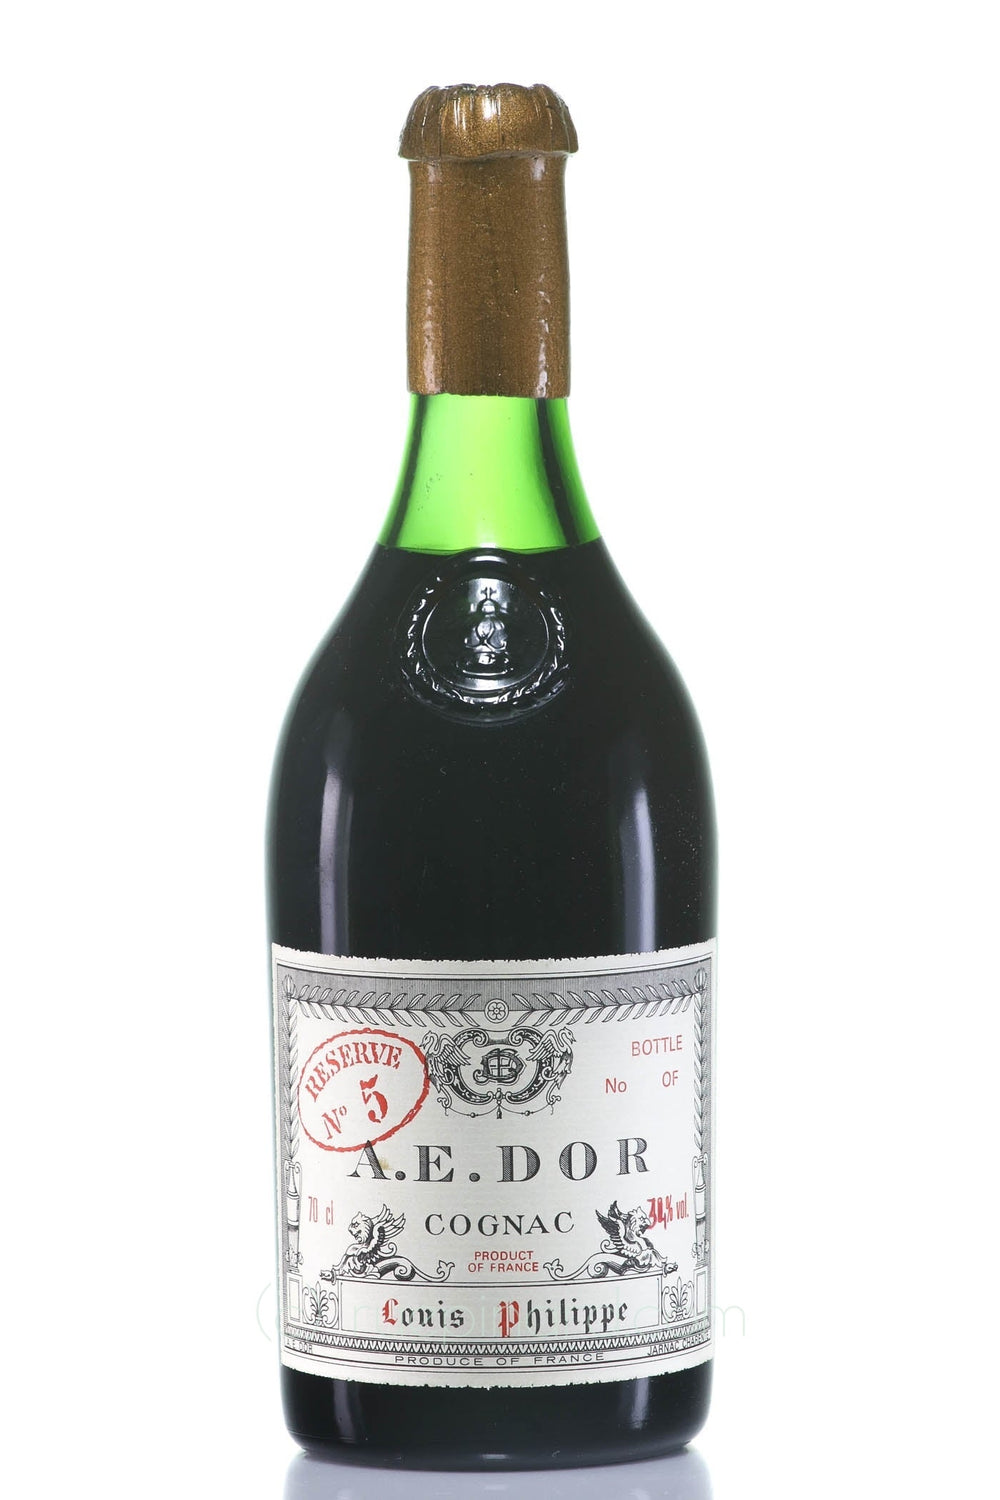 A.E. Dor Vieille Reserve No. 5 Grande Champagne Cognac (Louis Philippe era) - Rue Pinard